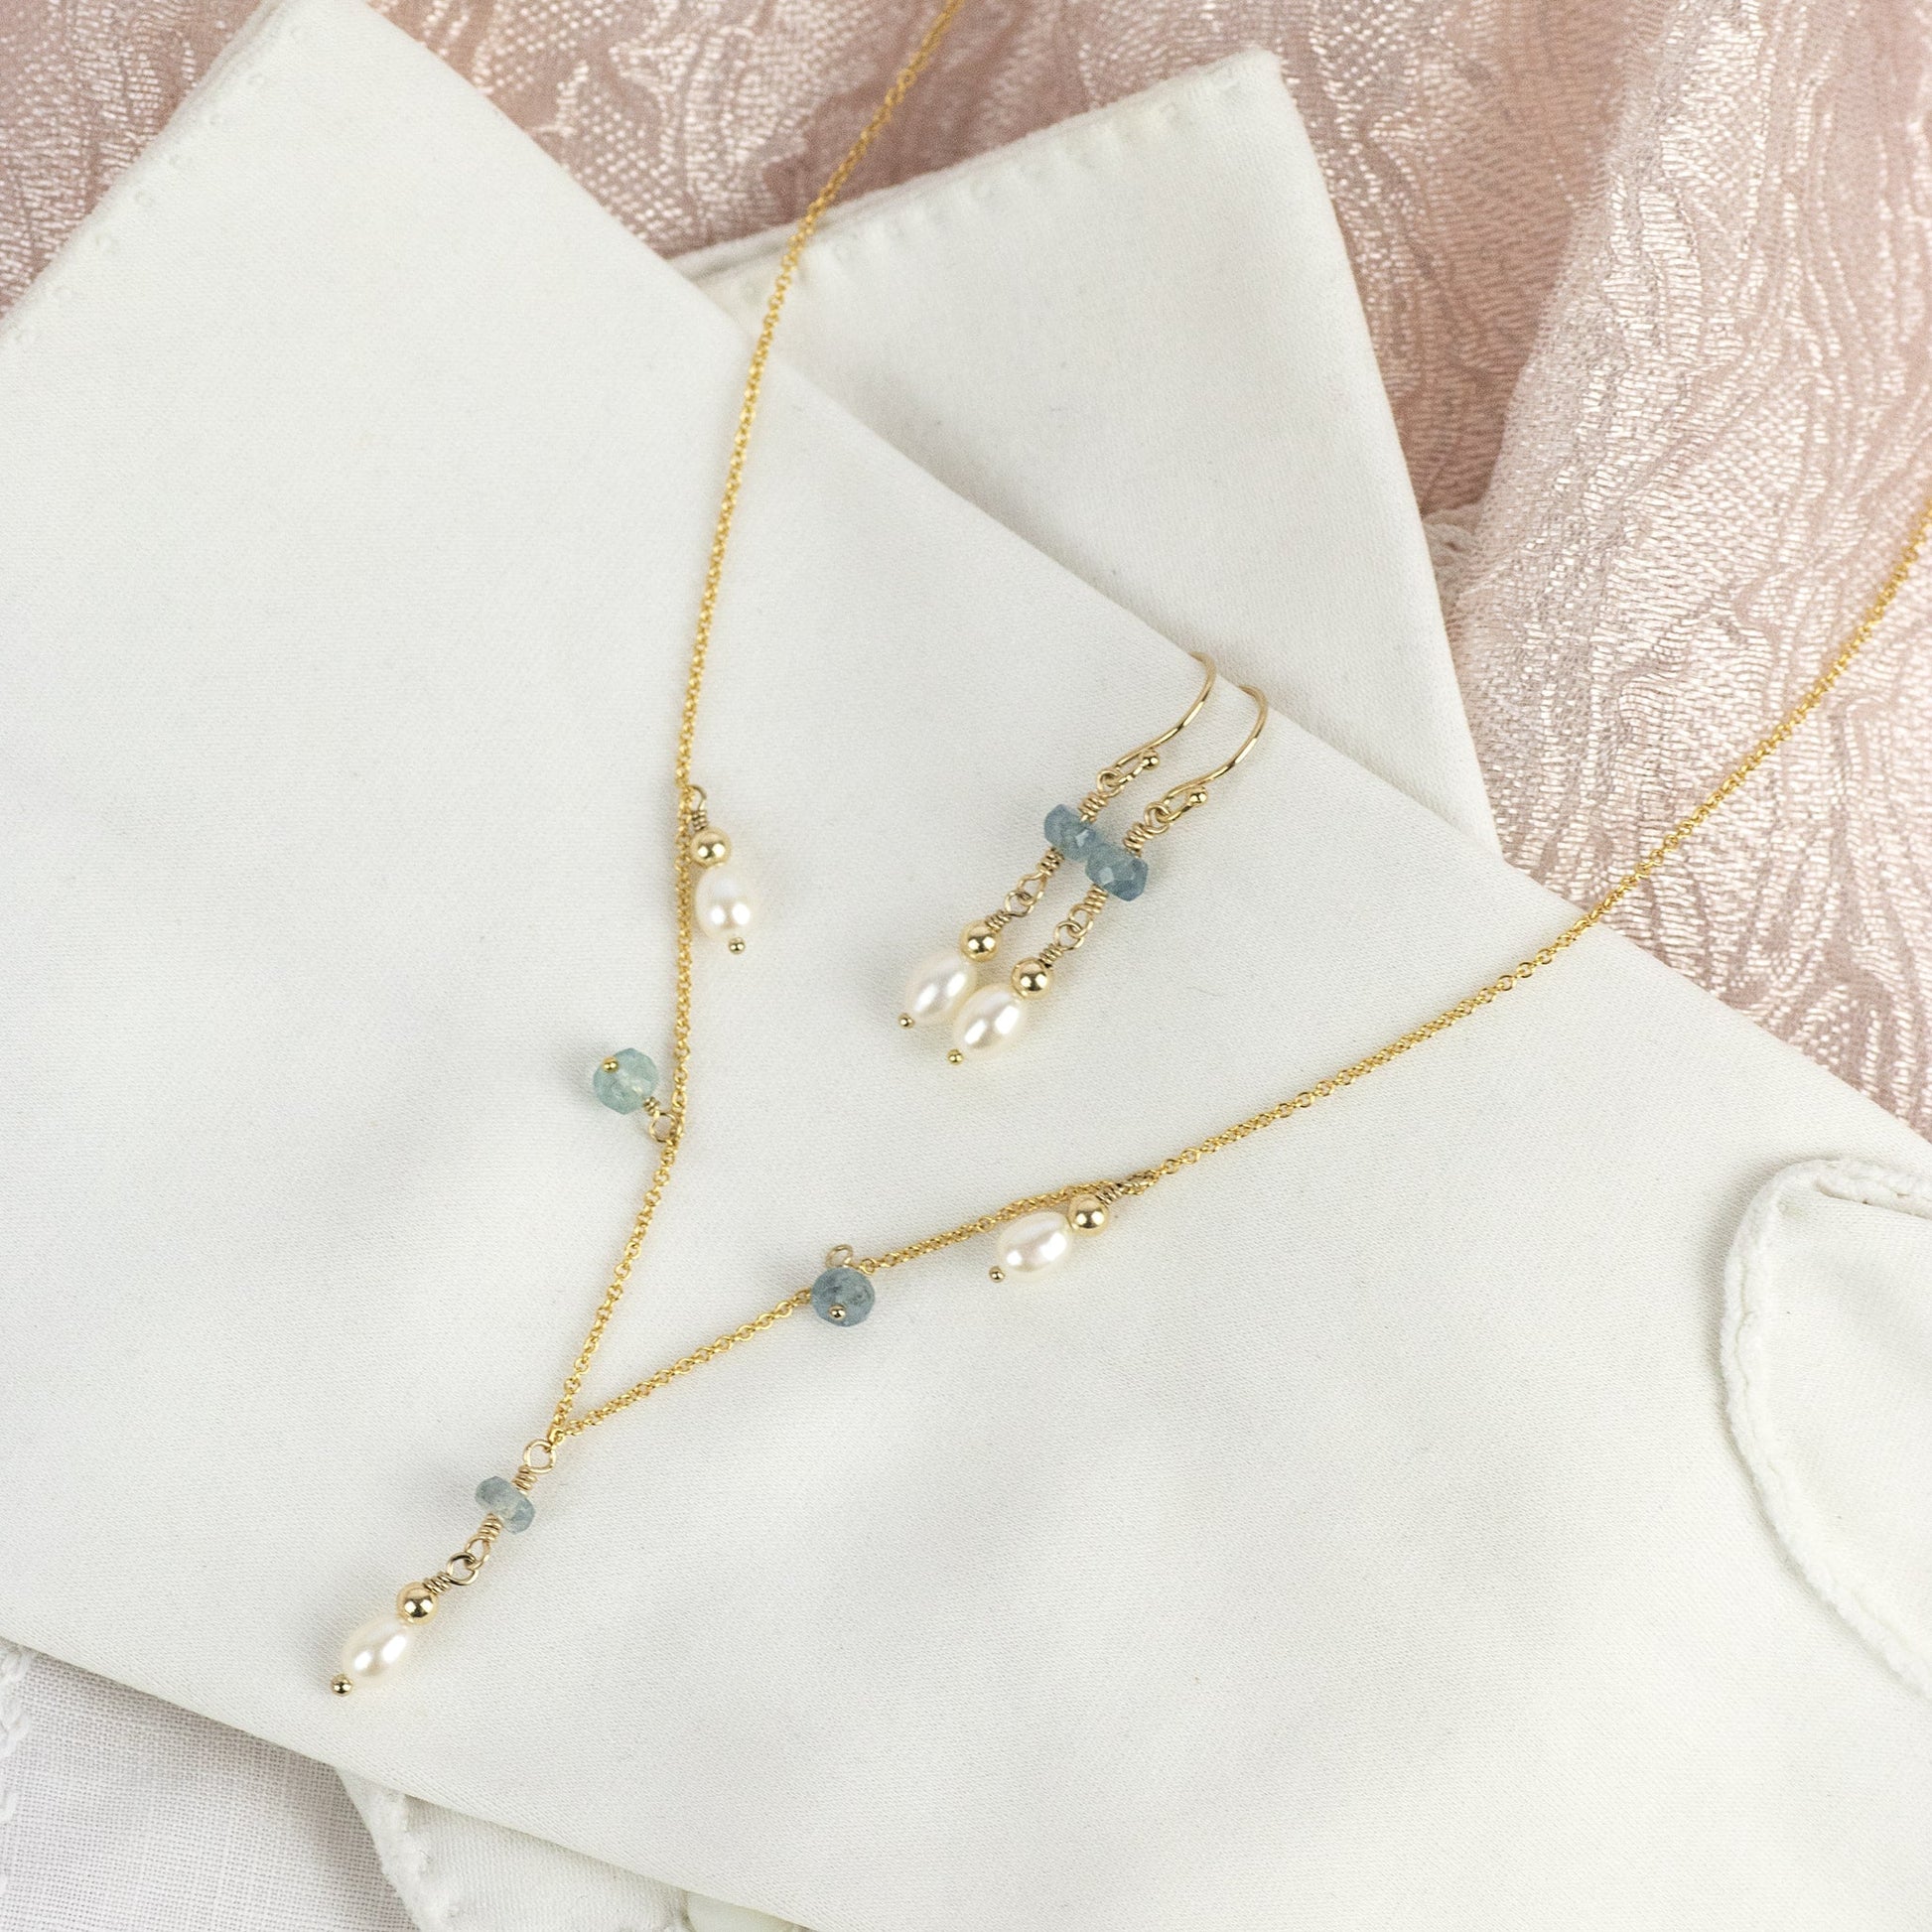 Aquamarine & Pearl Drop Earrings - Bridgerton Inspired - Daphne